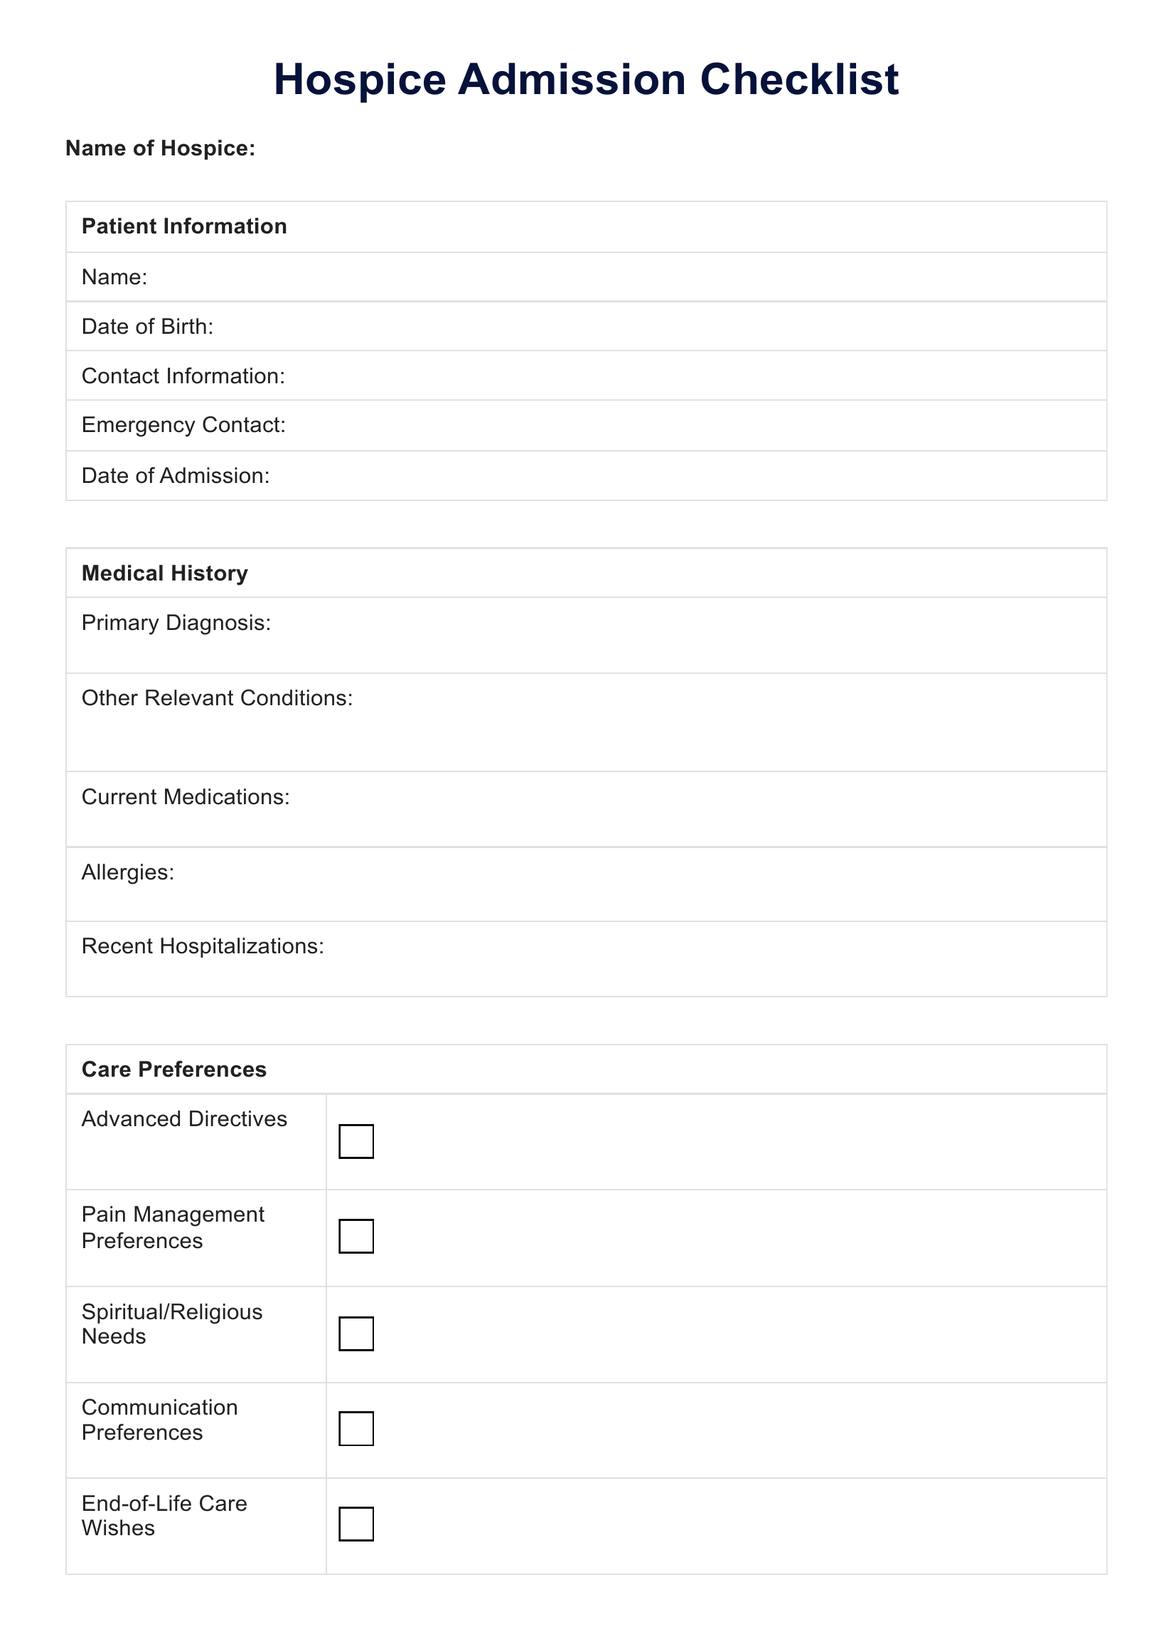 Hospice Admission Checklist PDF Example